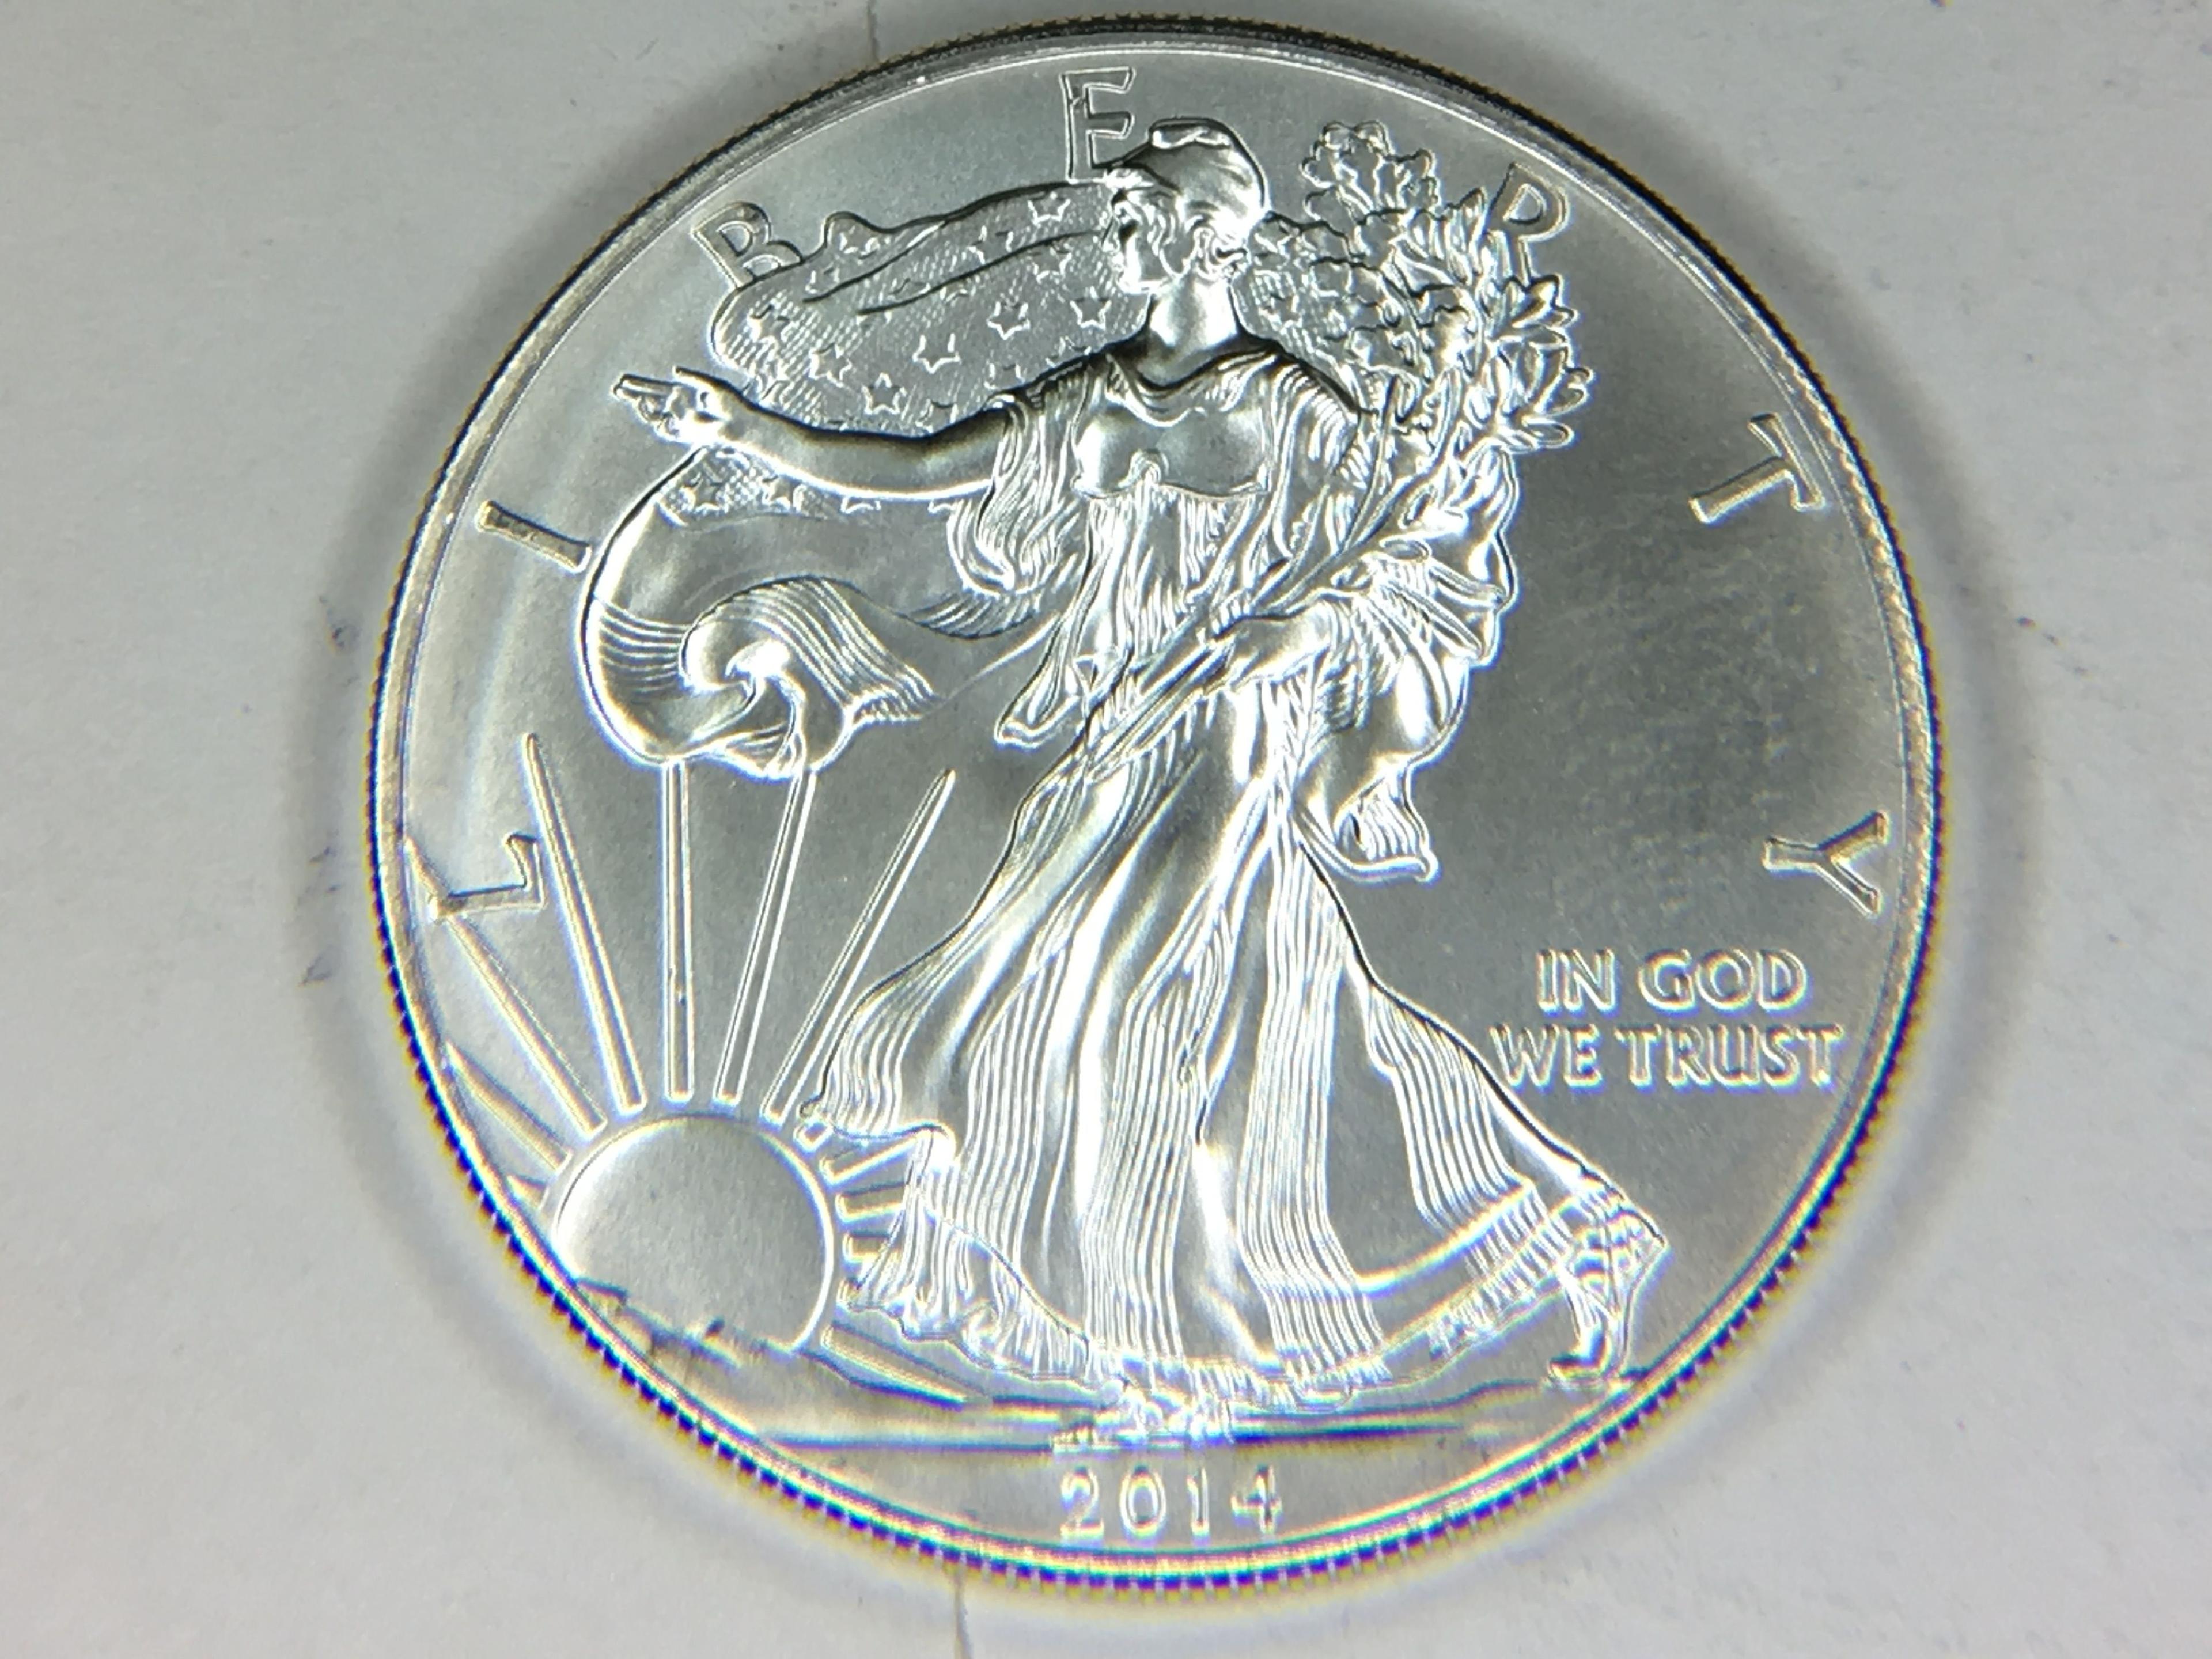 2014 Silver Eagle